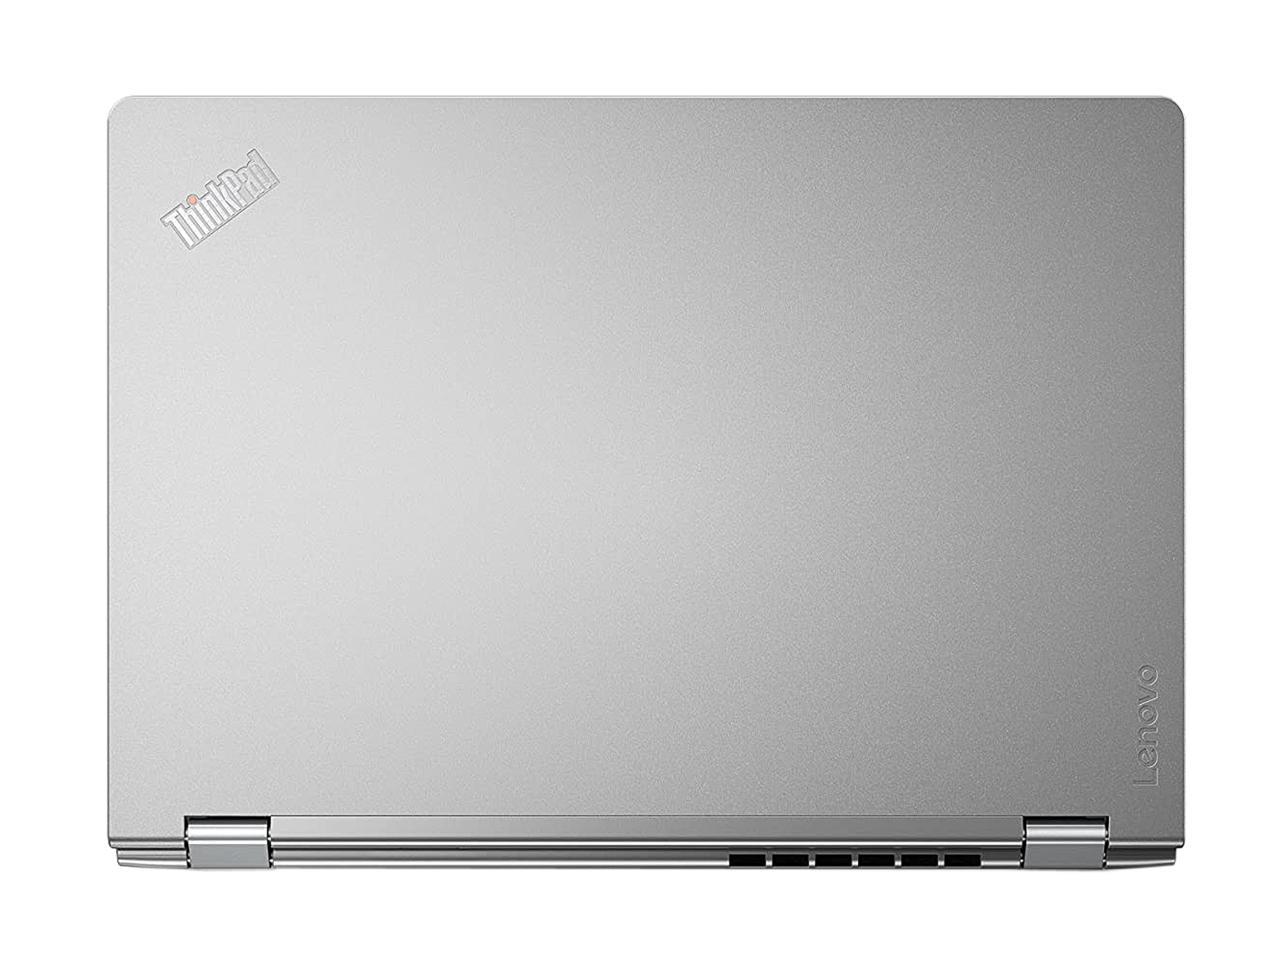 Lenovo Yoga 460 Intel Core i5 6th Gen 6200U (2.30 GHz) 8 GB Memory 256 GB SSD Intel HD Graphics 520 14" Touchscreen 2560 x 1440 Convertible Grade B 2-in-1 Laptop Windows 10 Pro 64-bit